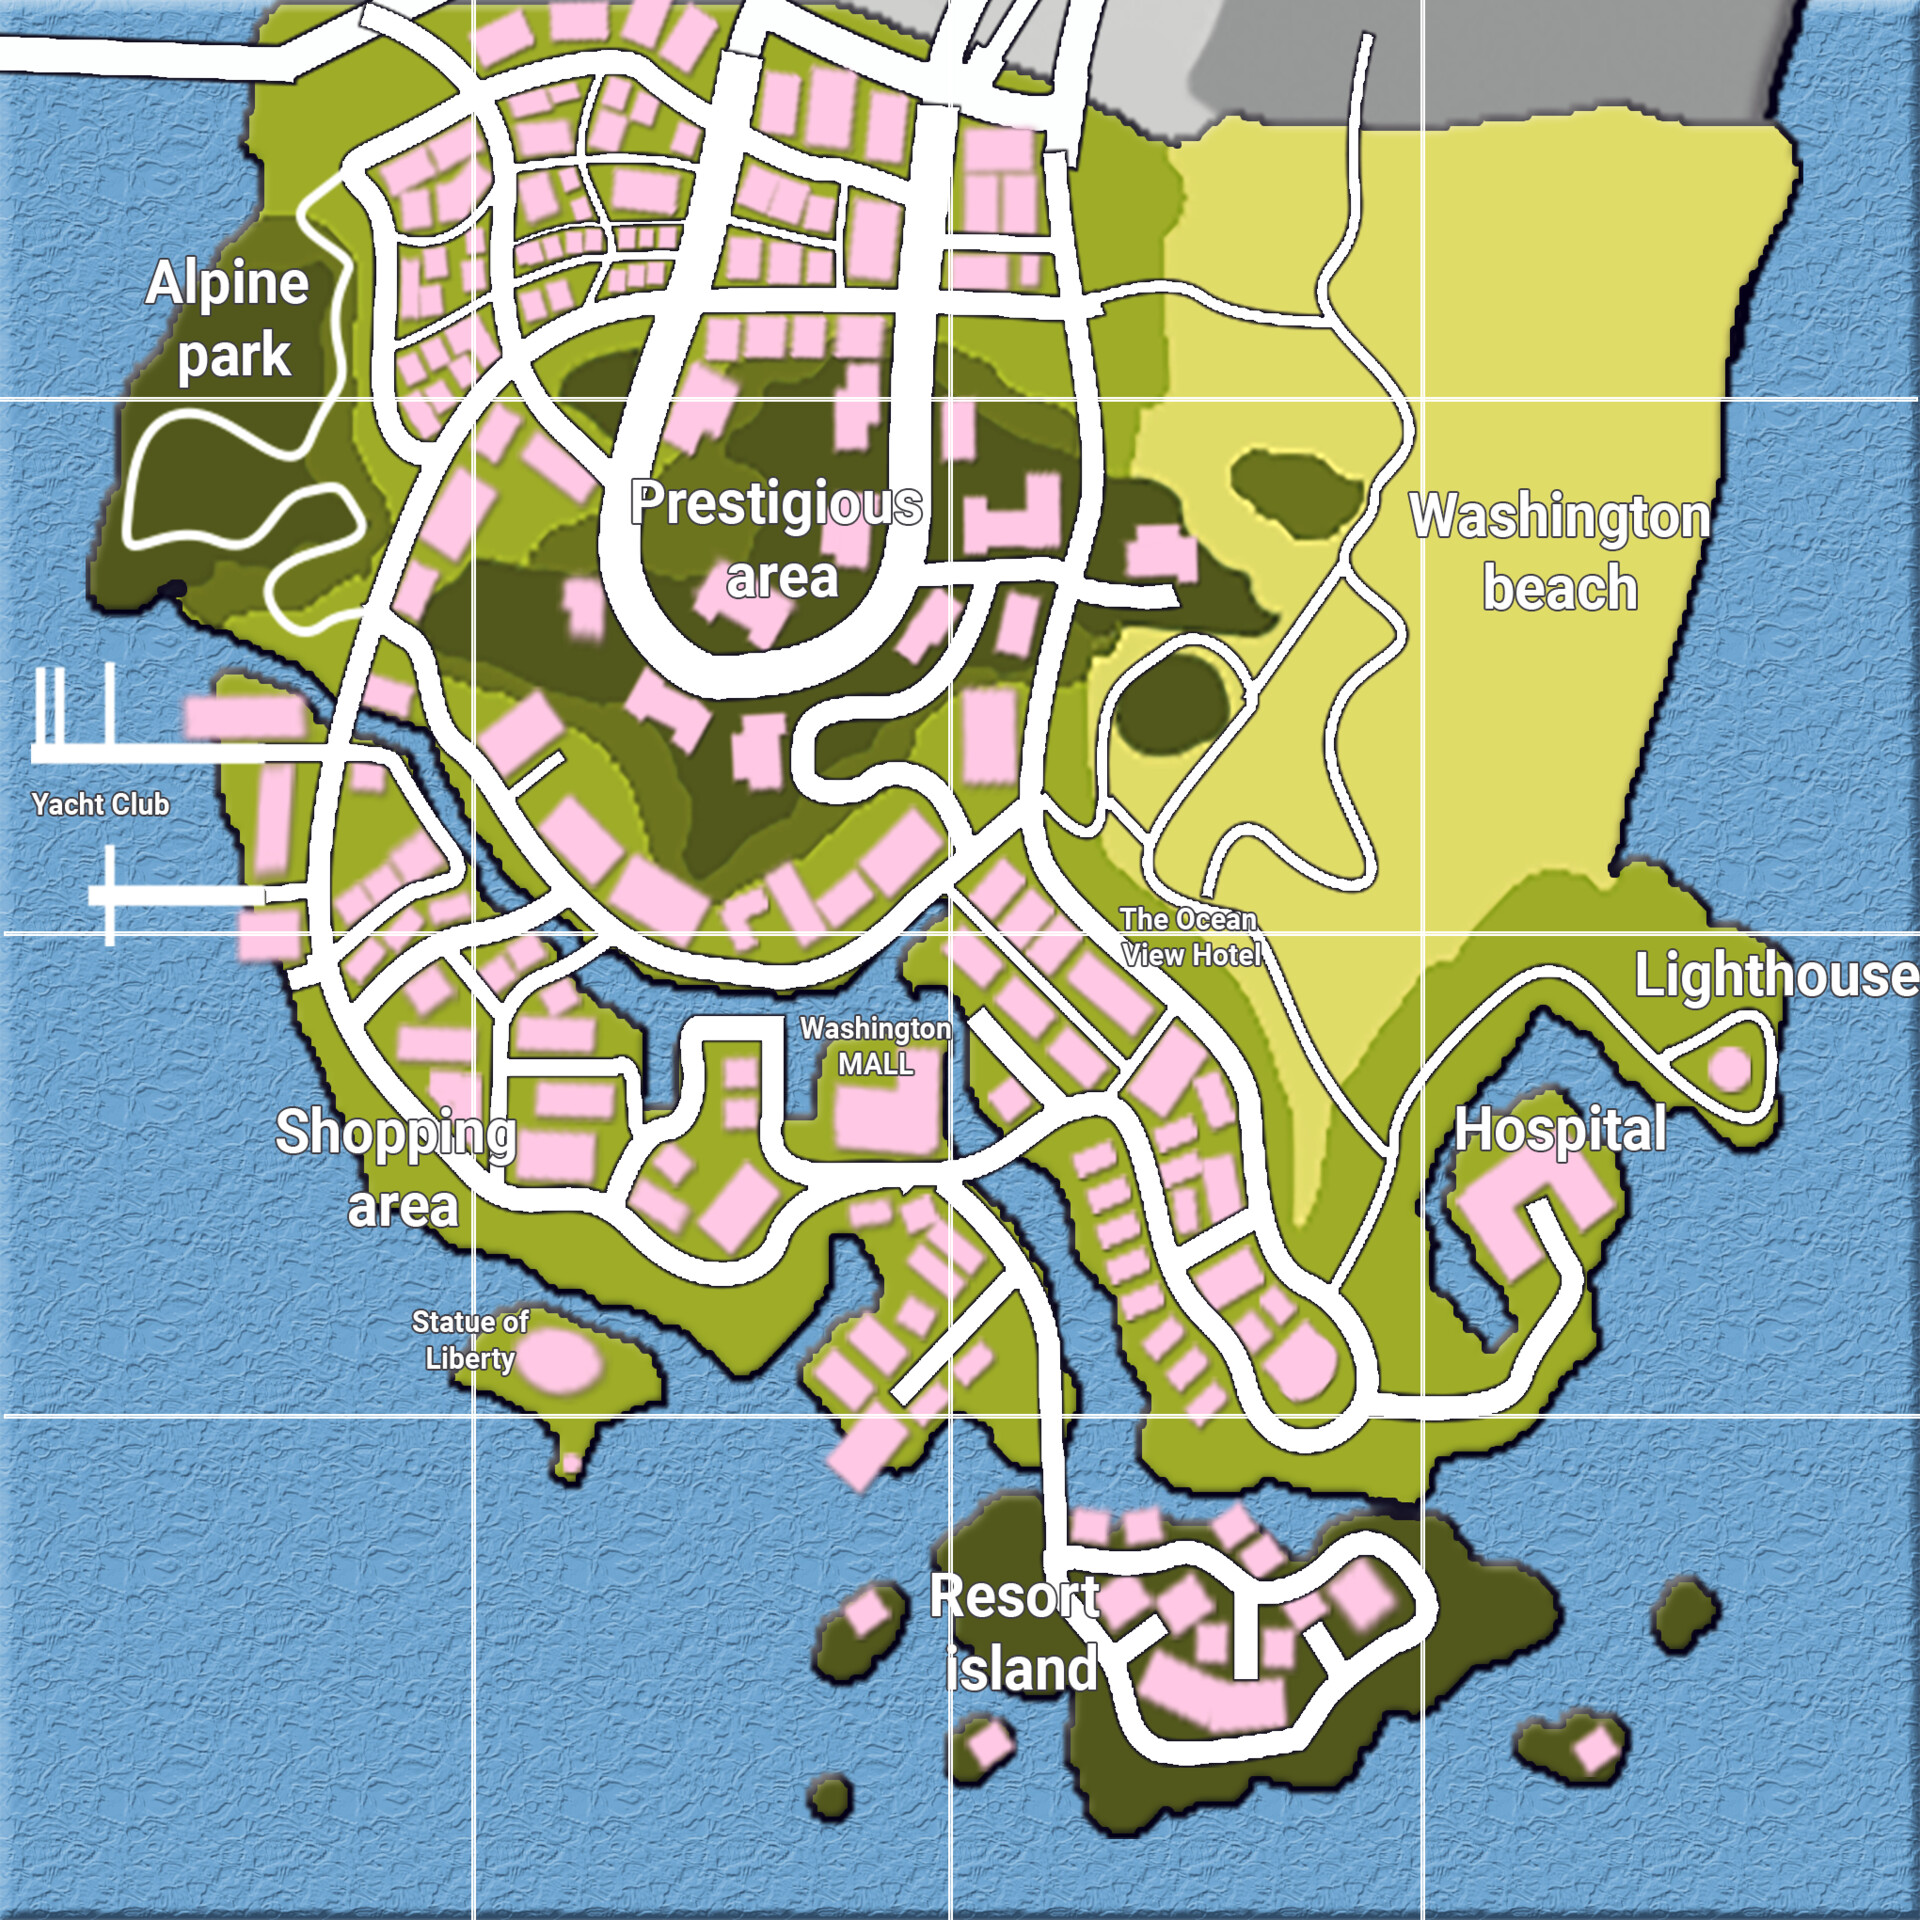 GTA 6. Grand Theft Auto VI: Vice City Map 2/4 by avatar-sd on DeviantArt